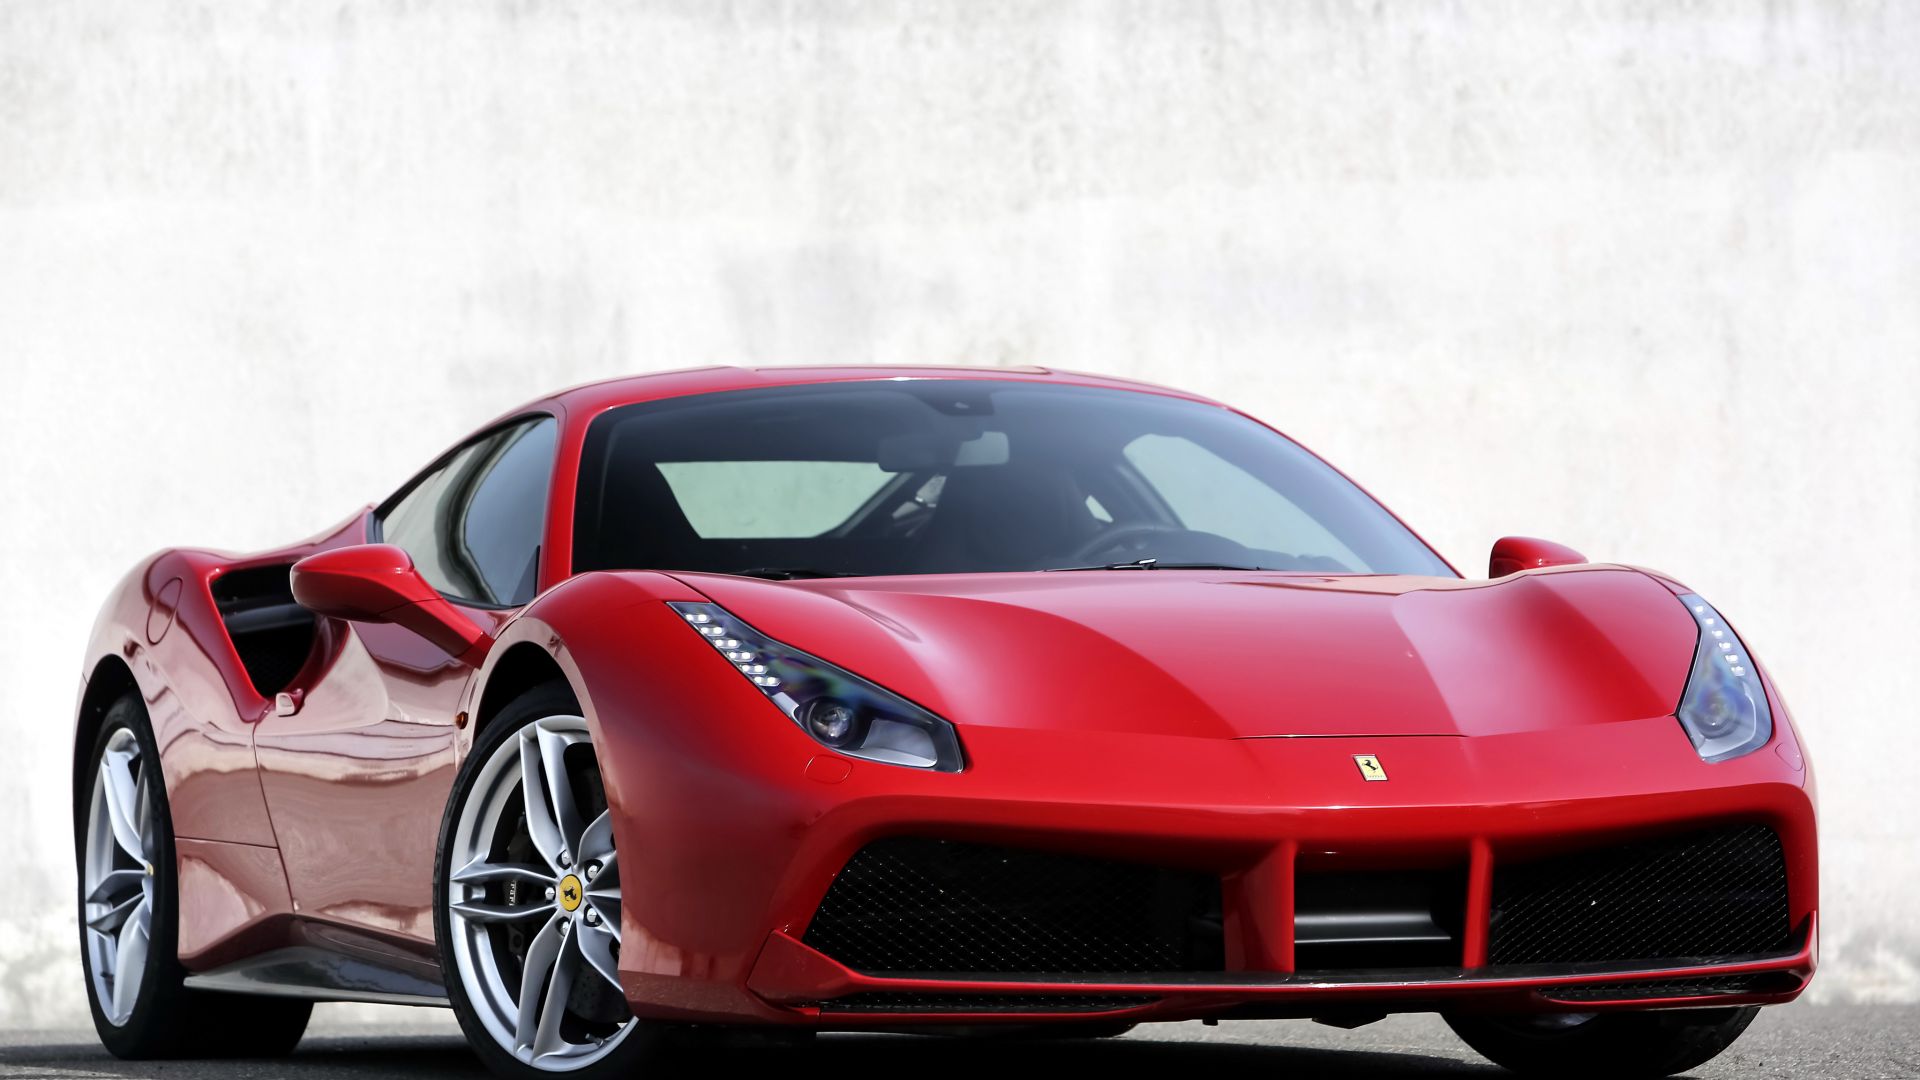 Феррари 488 GTB, купе, суперкар, спорткар, обзор, купить, аренда, Ferrari 488 GTB, coupe, supercar, sport car, review, buy, rent (horizontal)